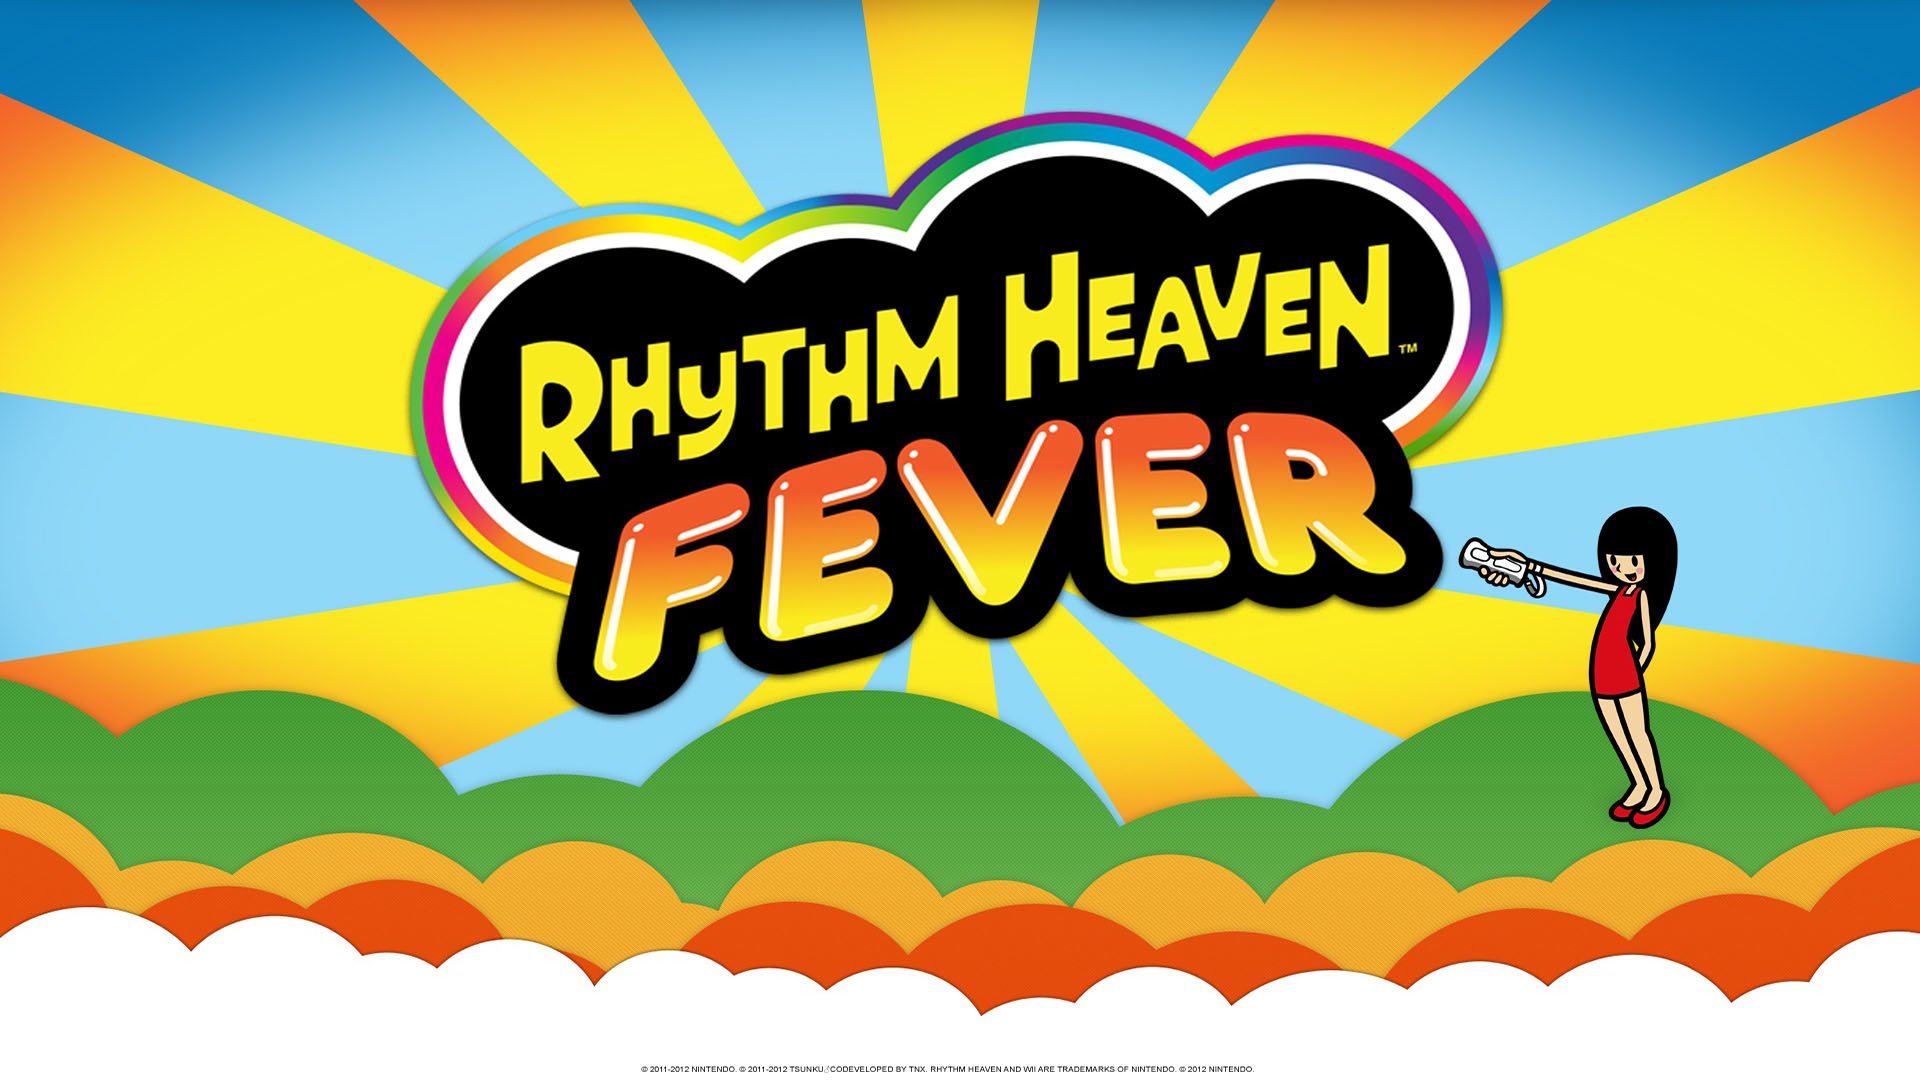 Rhythm Heaven Fever HD Wallpaper